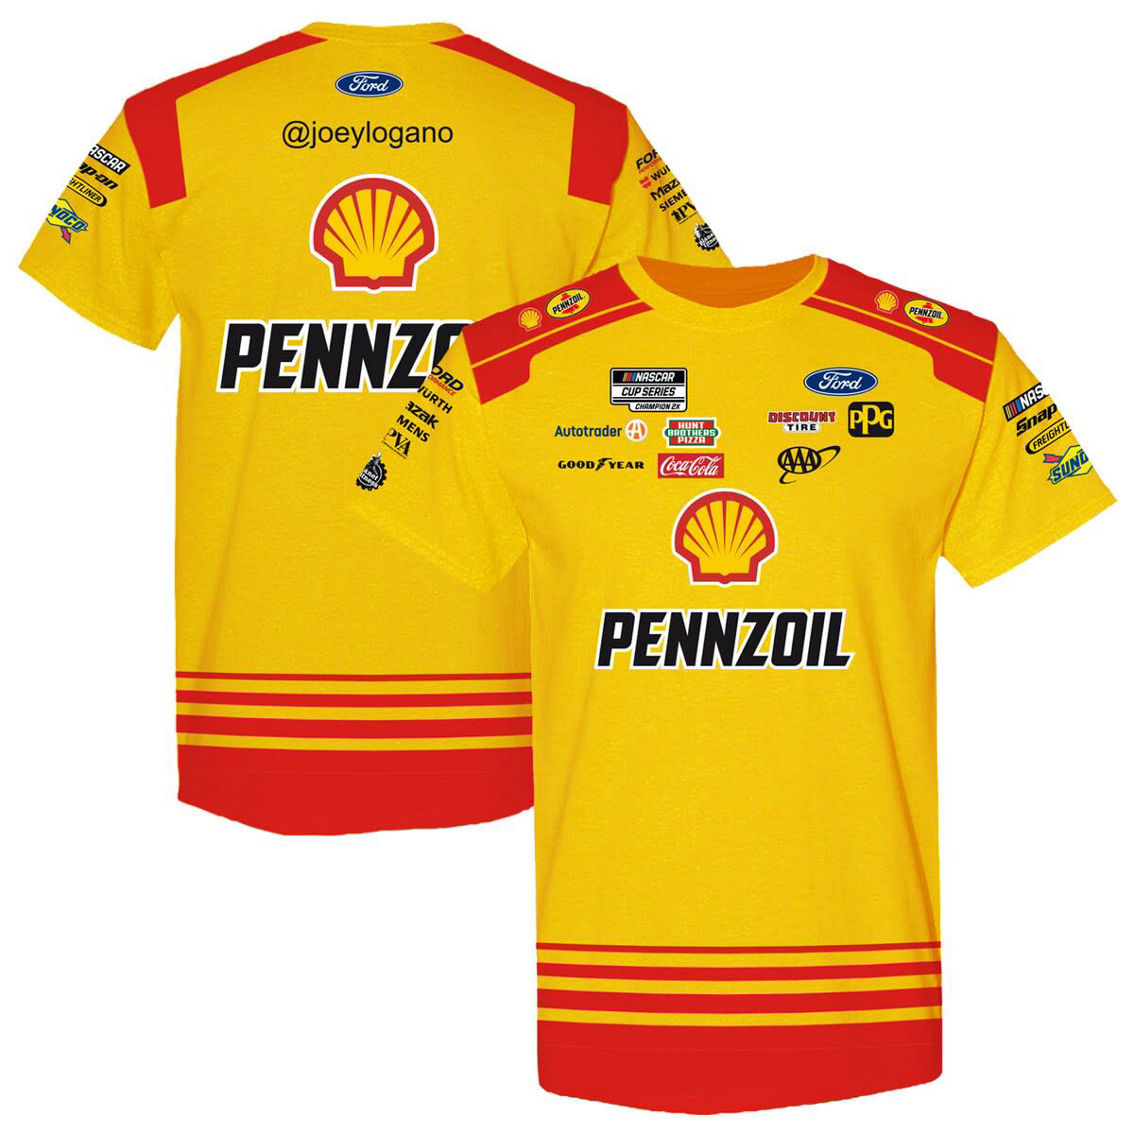 Team Penske Men's Team Penske Yellow/Red Joey Logano Shell-Pennzoil Uniform T-Shirt - Image 2 of 4